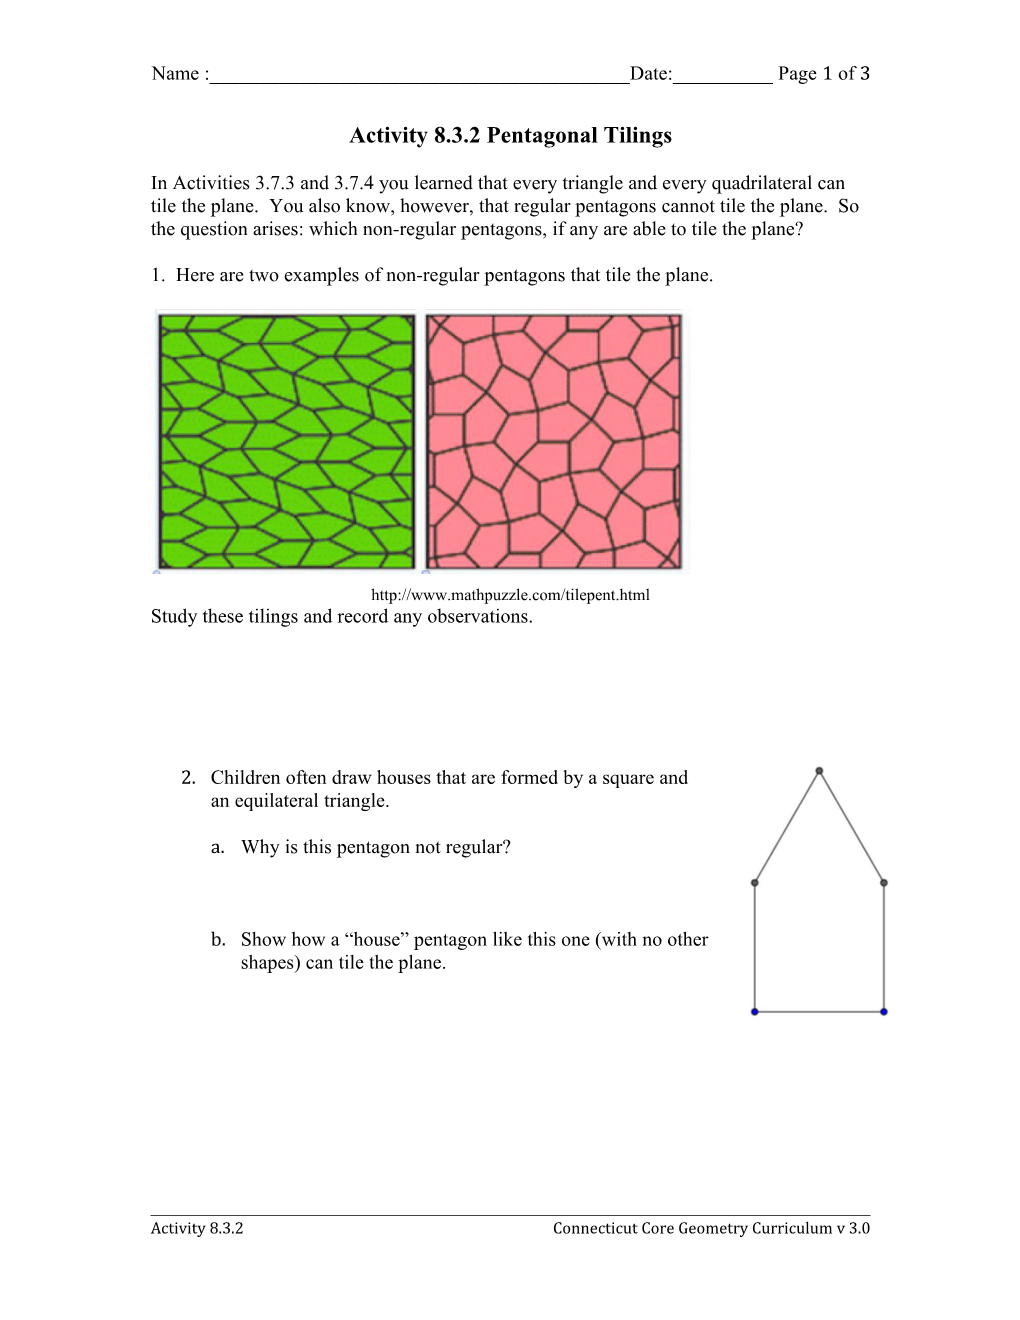 Activity 8.3.2 Pentagonal Tilings